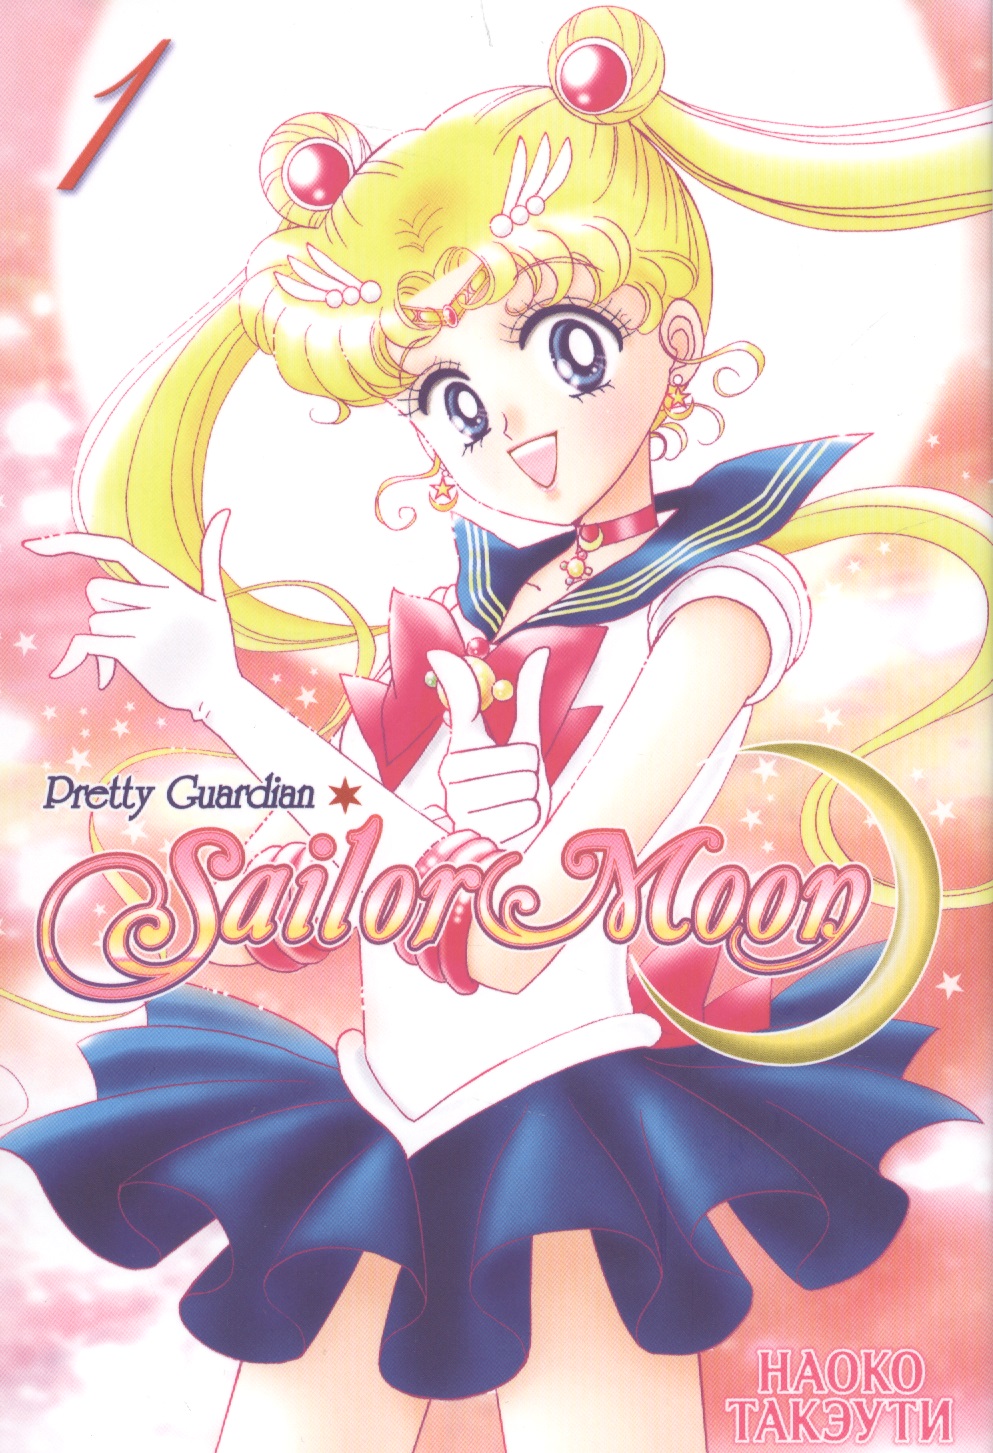 Такэути Наоко Sailor Moon. Том 1. такэути наоко sailor moon том 2